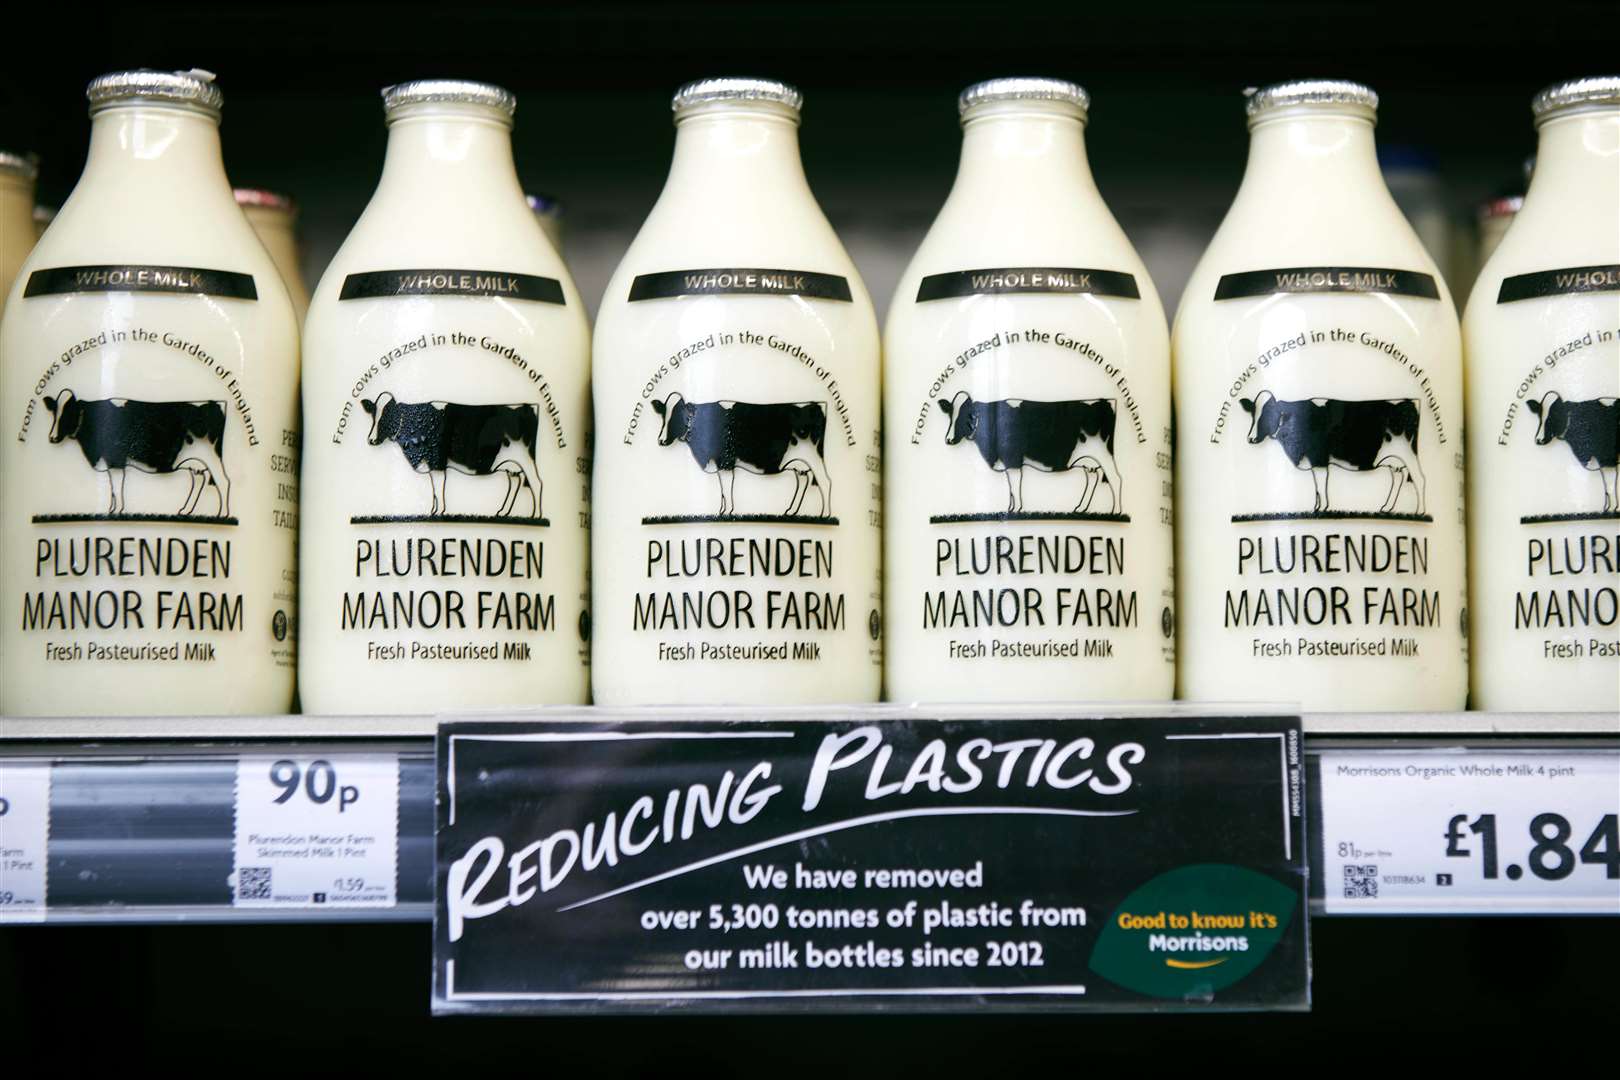 Alongside asking people to use refillable bottles, Morrisons is also trialling glass milk bottles